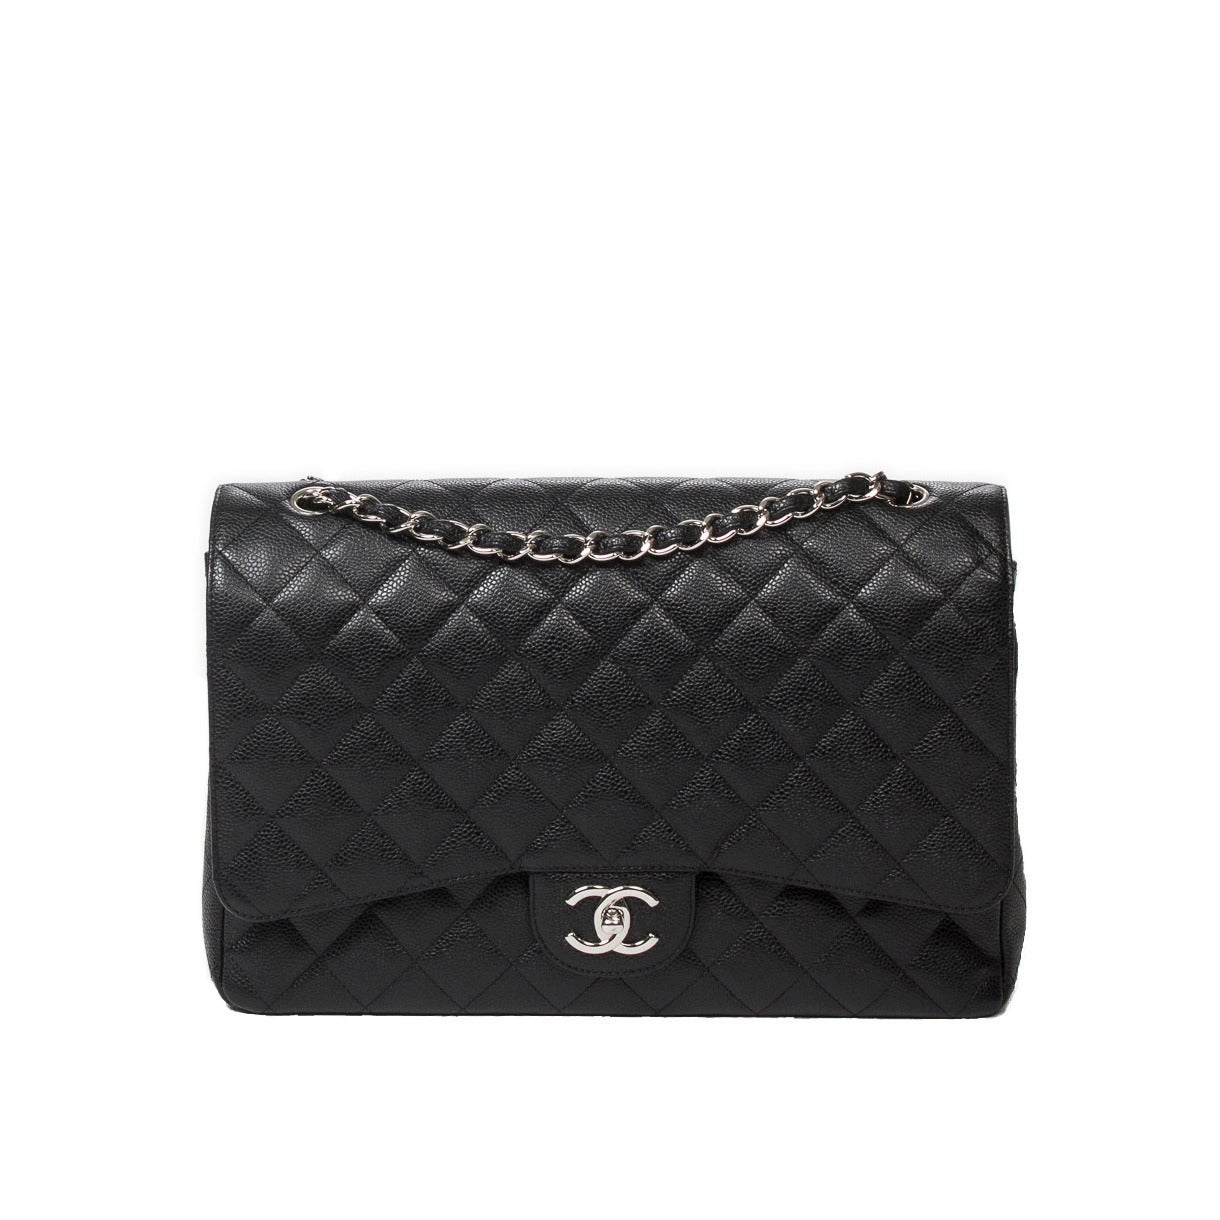 Chanel Jumbo Black Caviar Leather For Sale